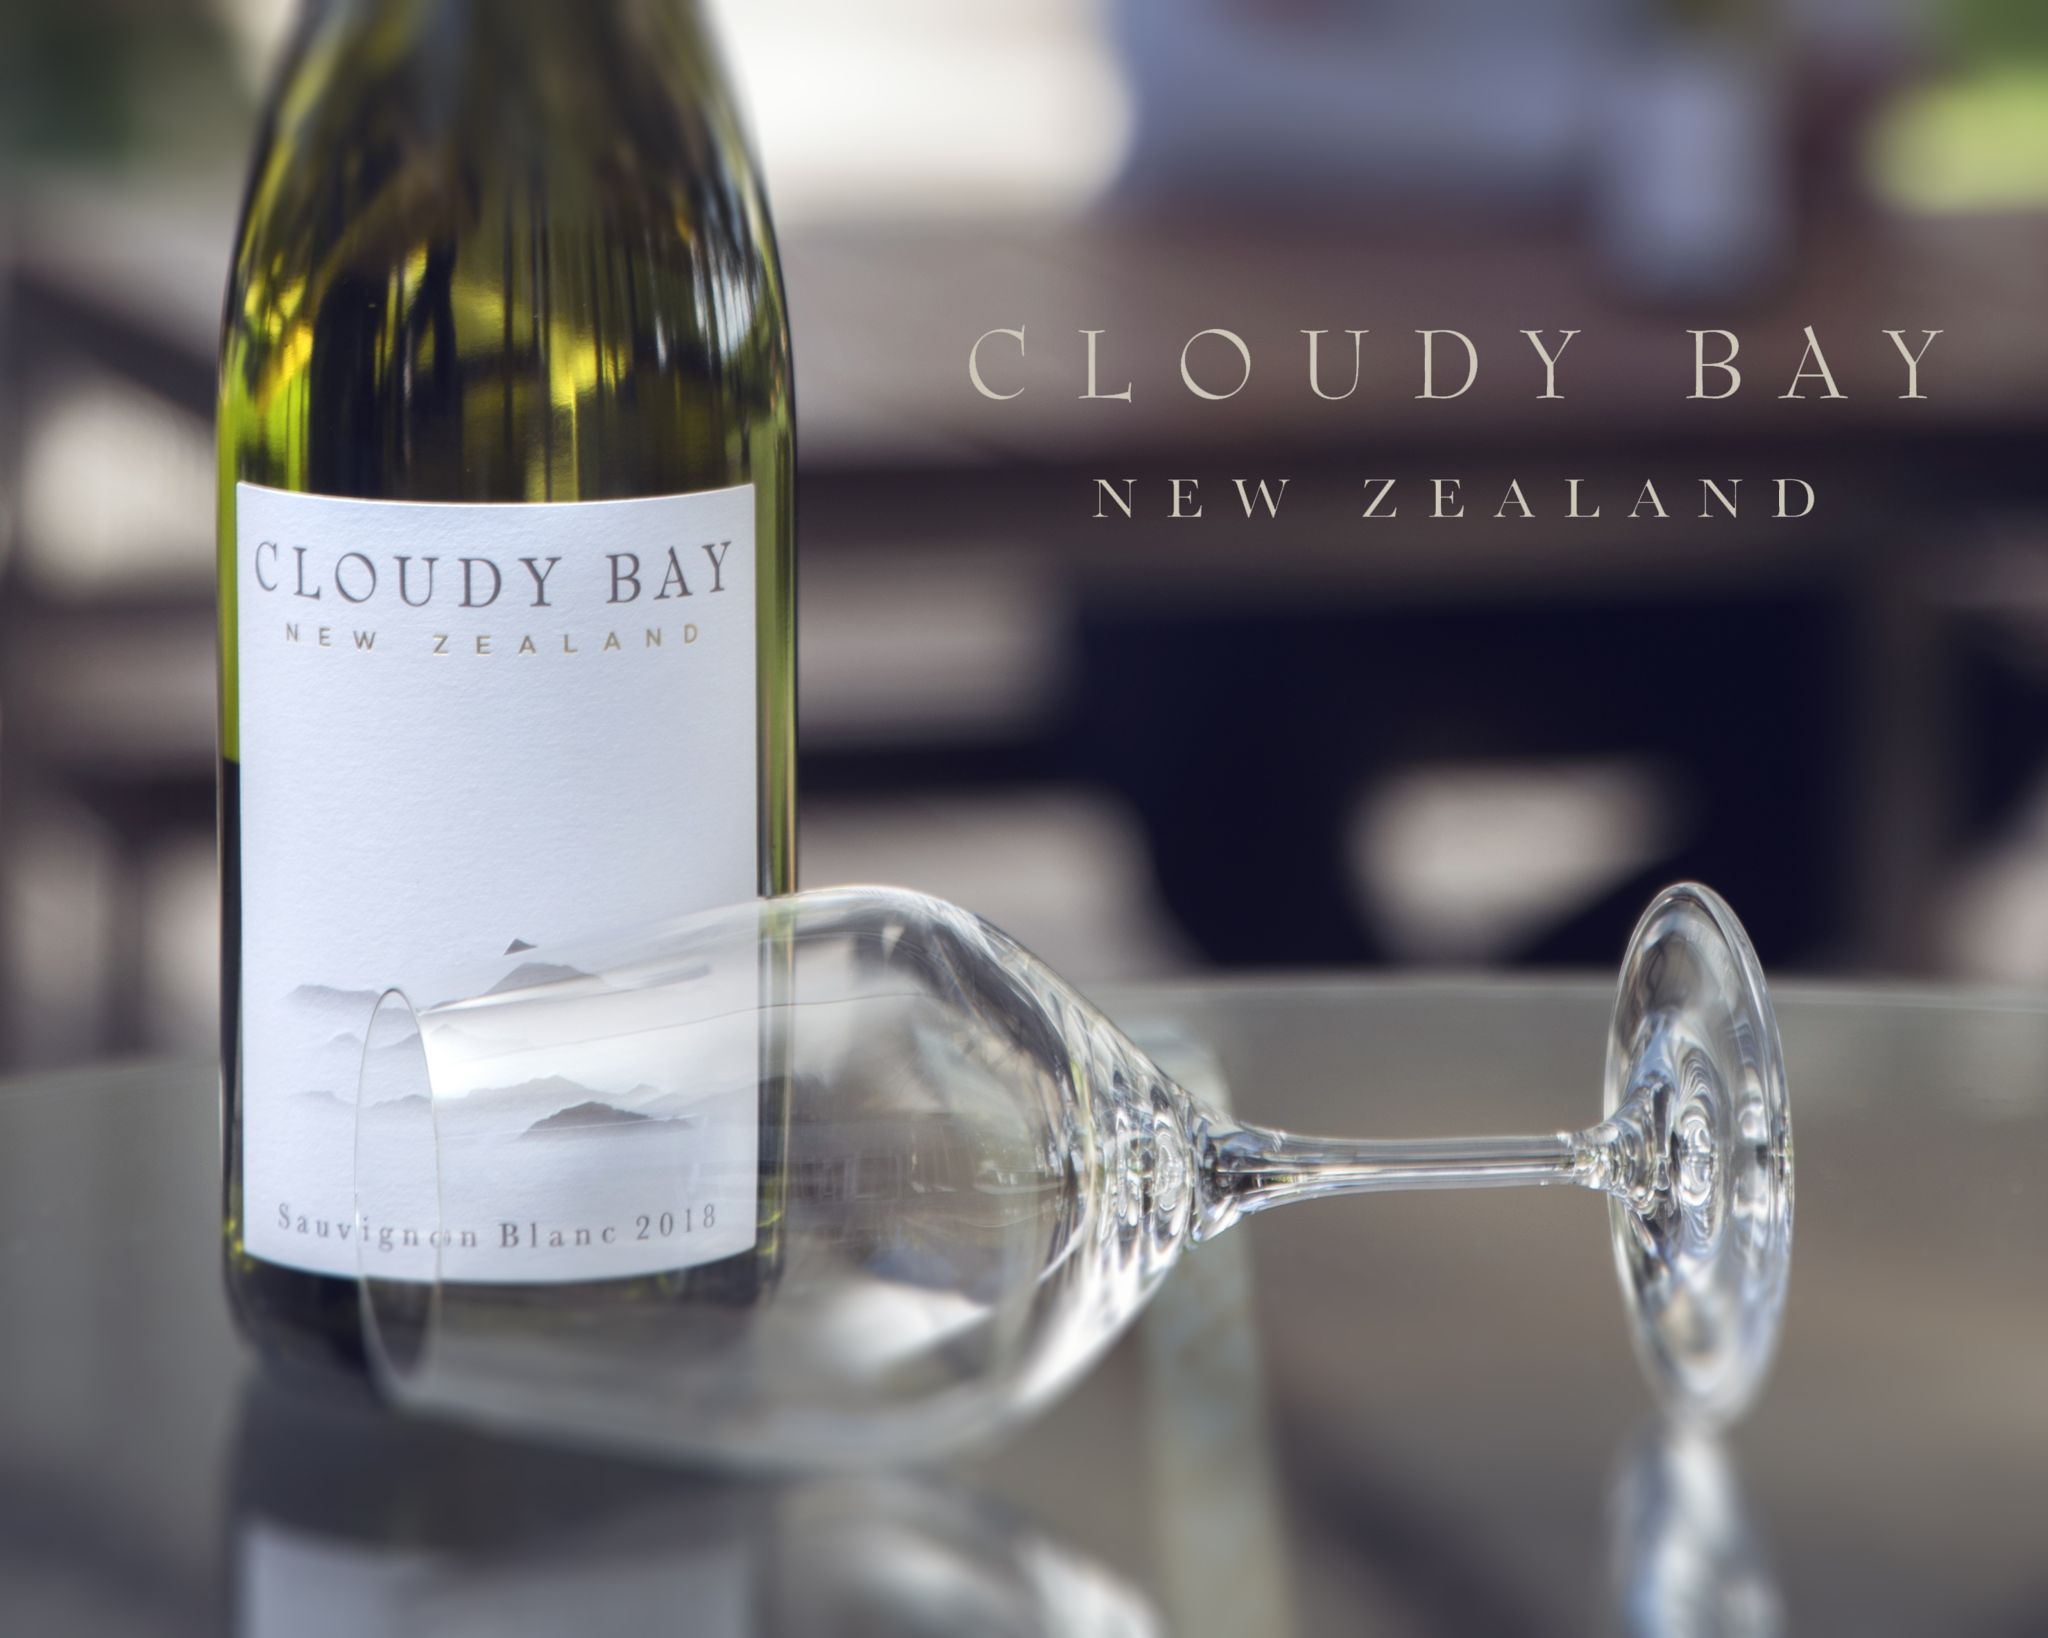 Marlborough wine tasting, the Cloudy Bay way